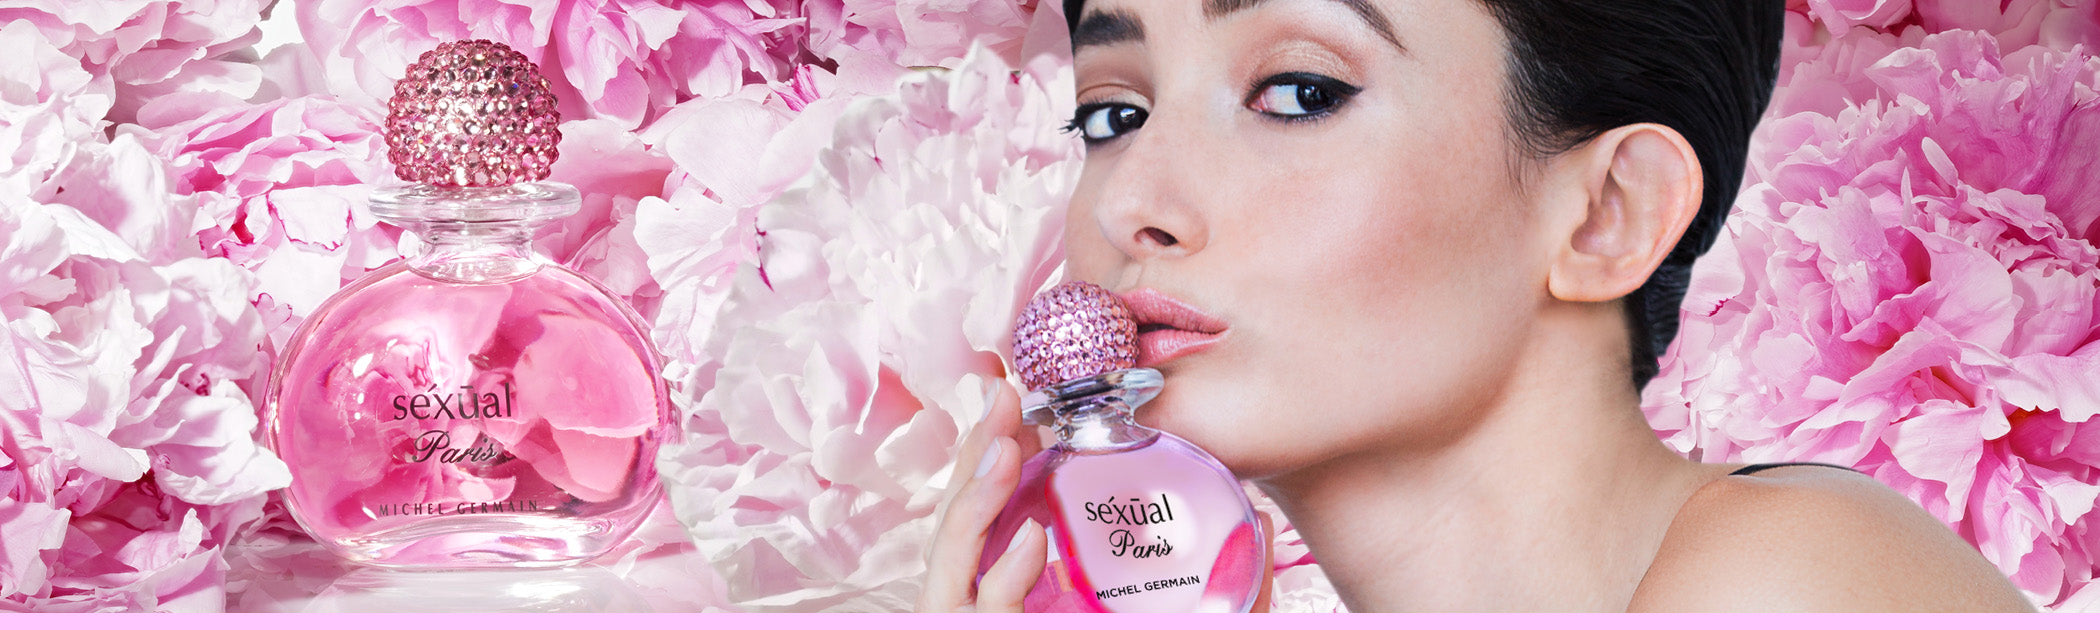 sexual-paris-perfume-banner